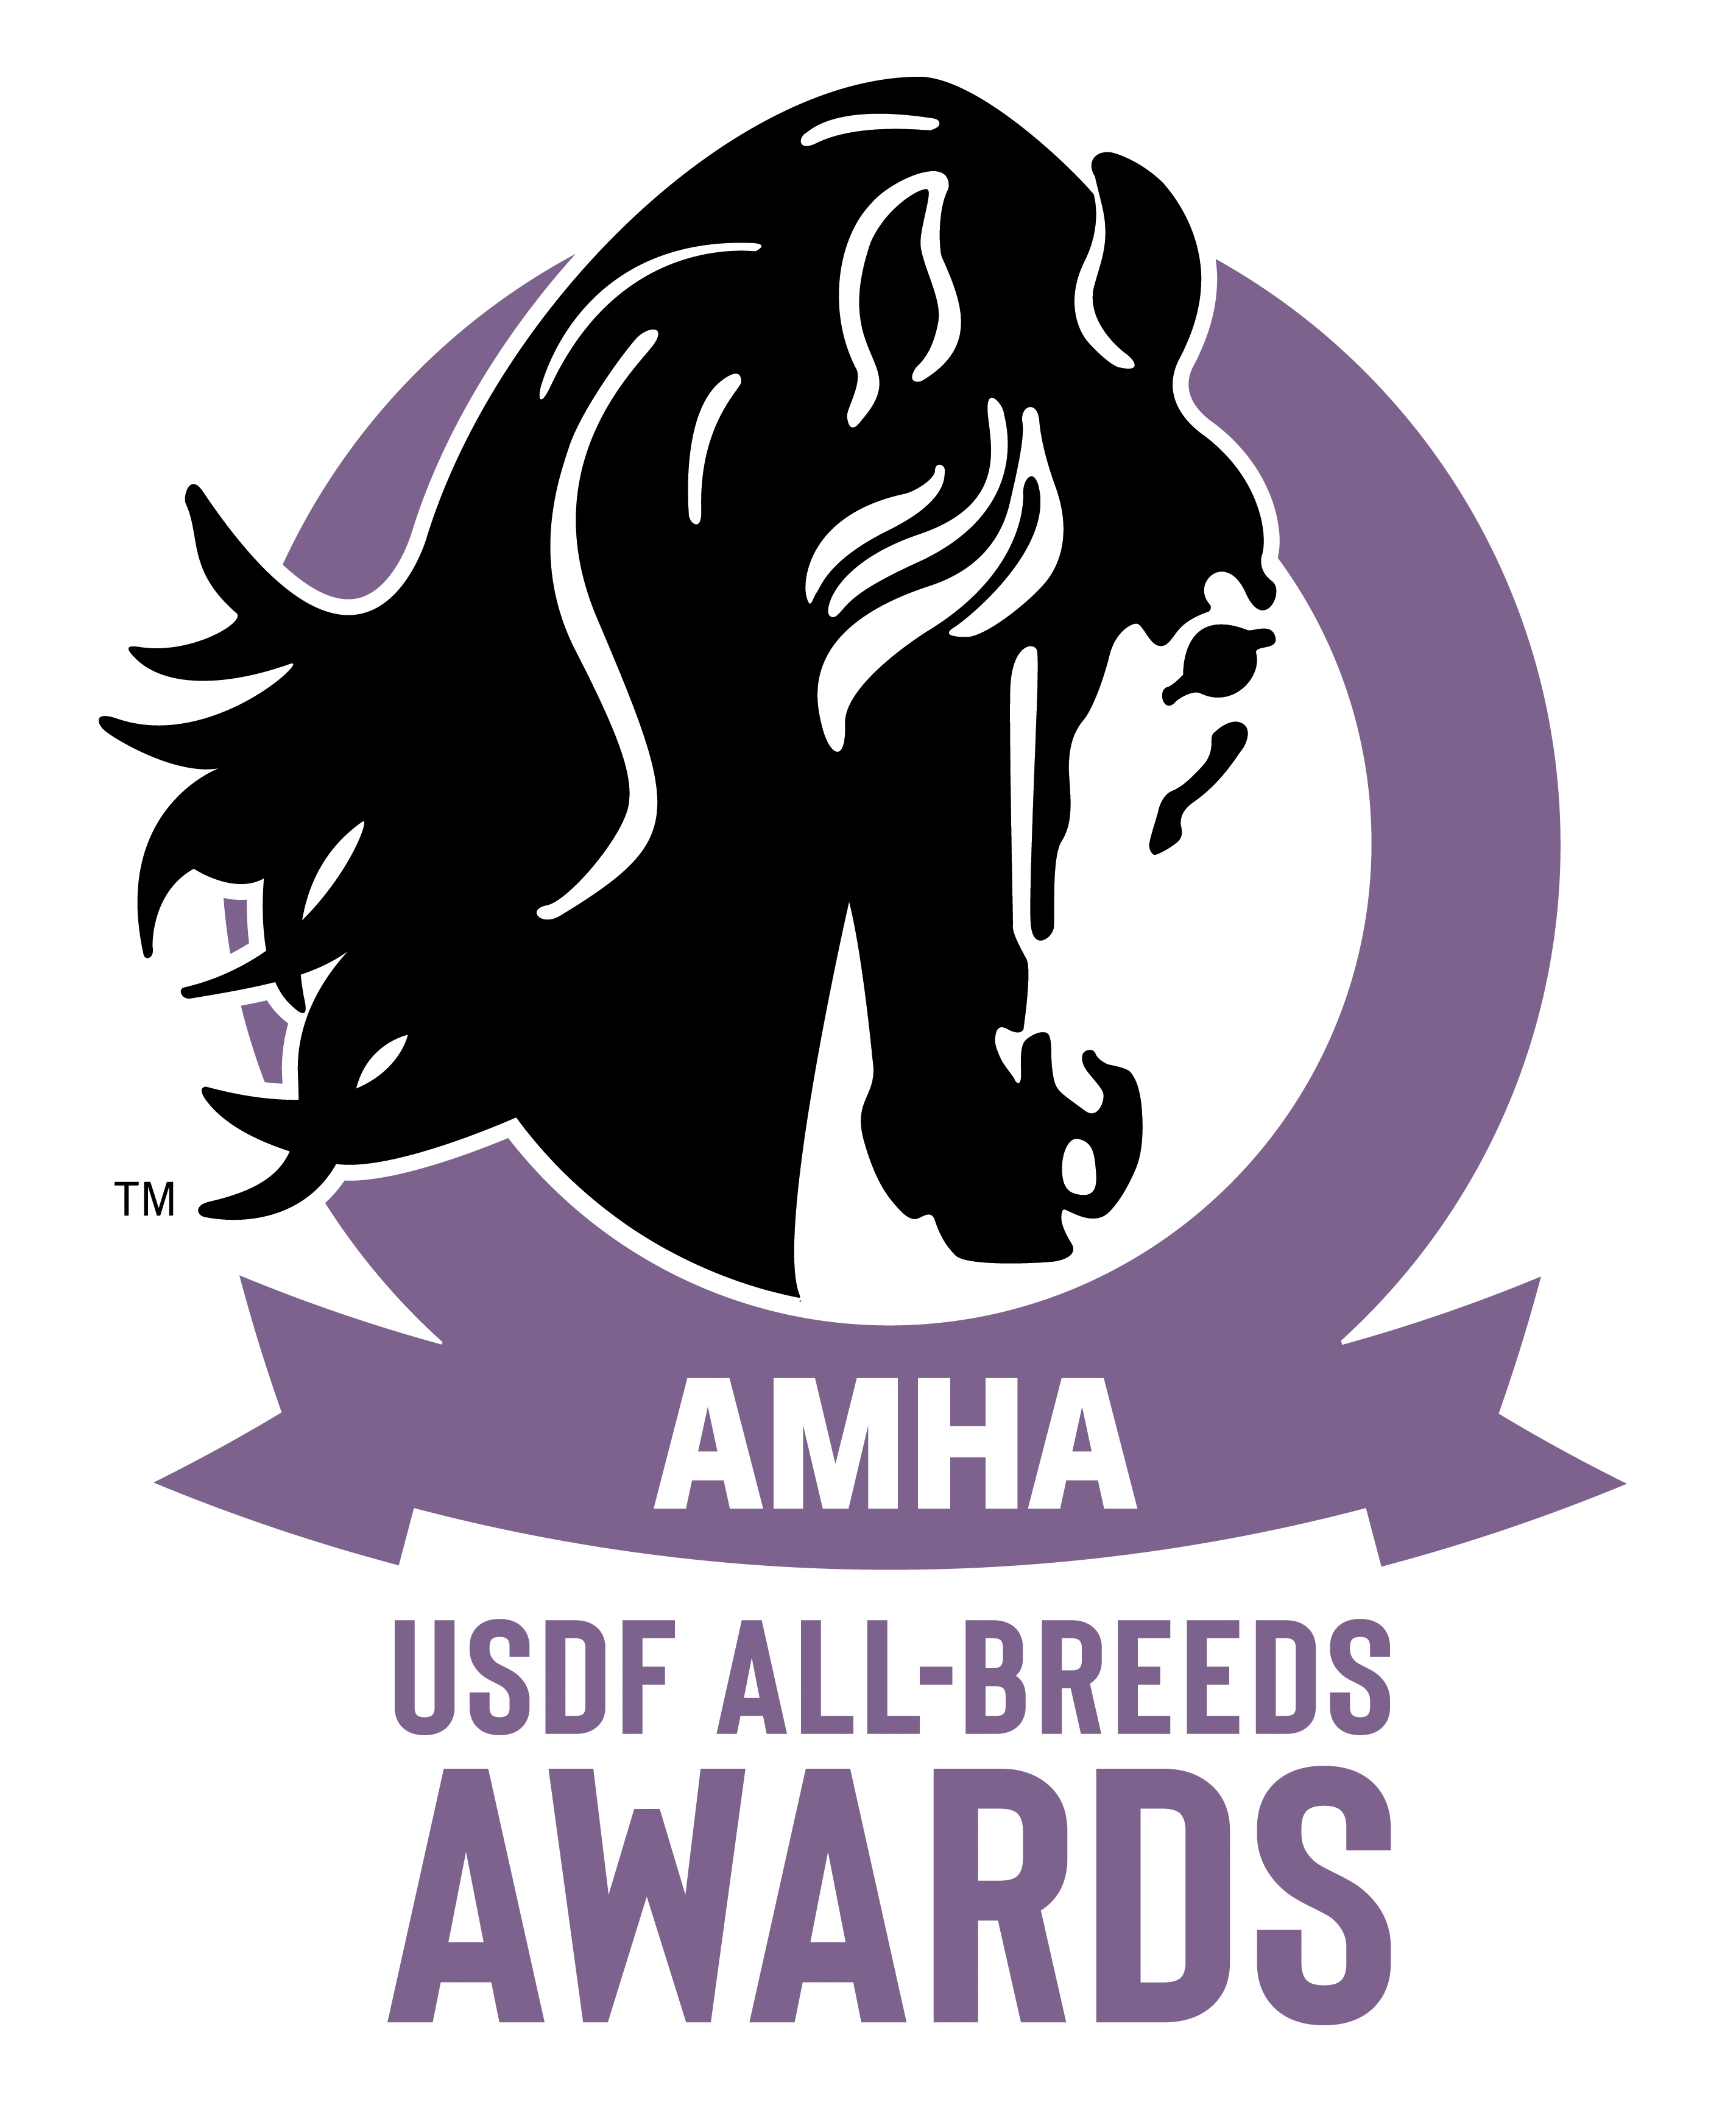 page_1008_amhaprogram_logos_usdfall_breeds_awards.jpg